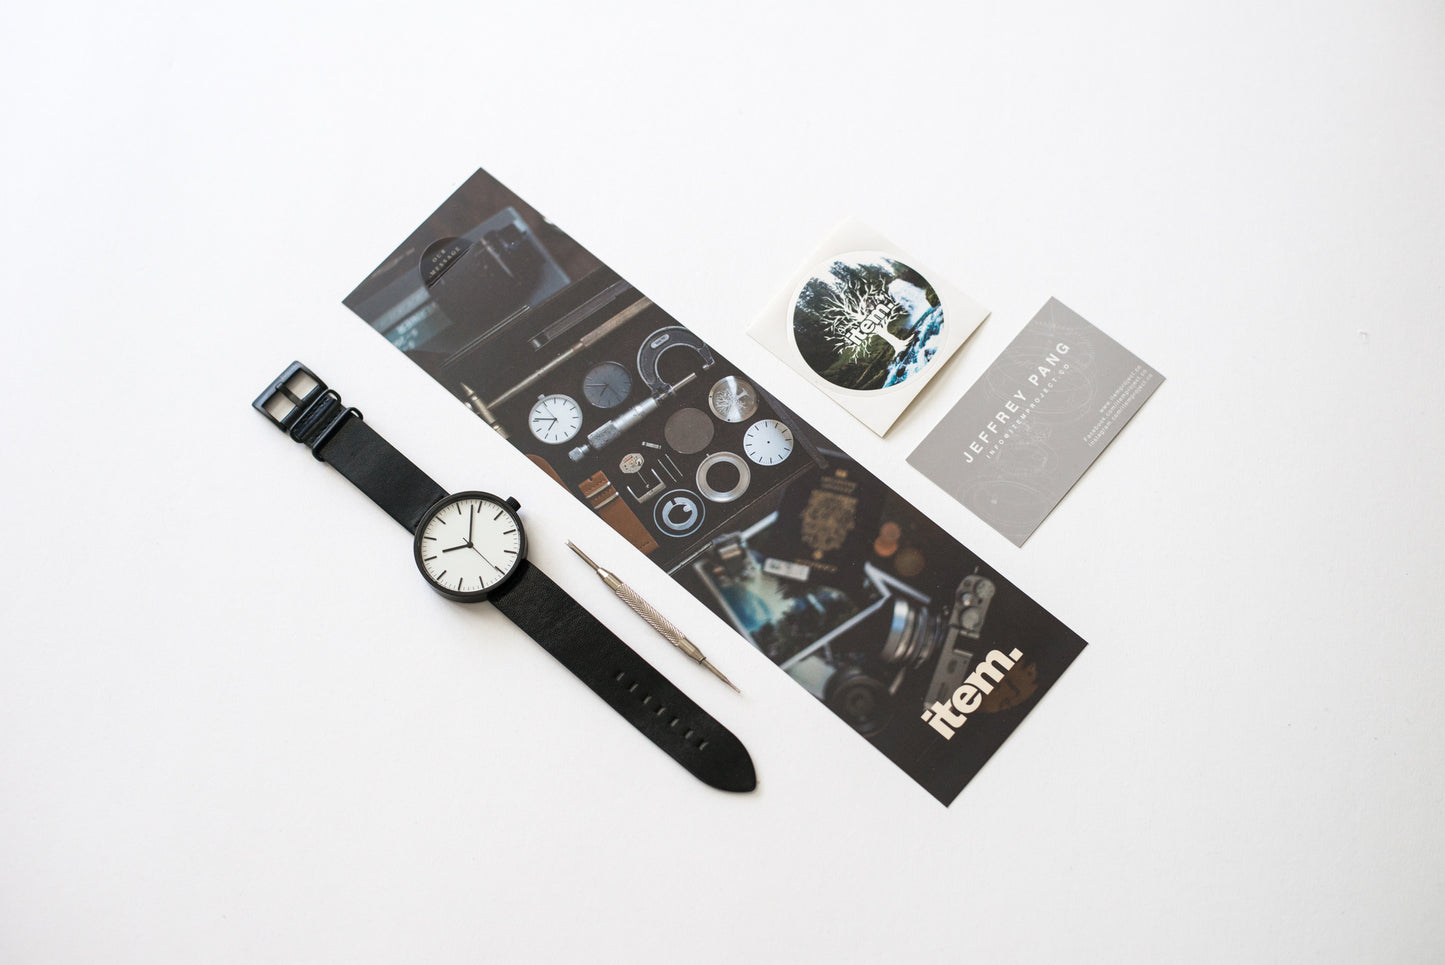 ITEM #002: Charcoal Wrist Watch